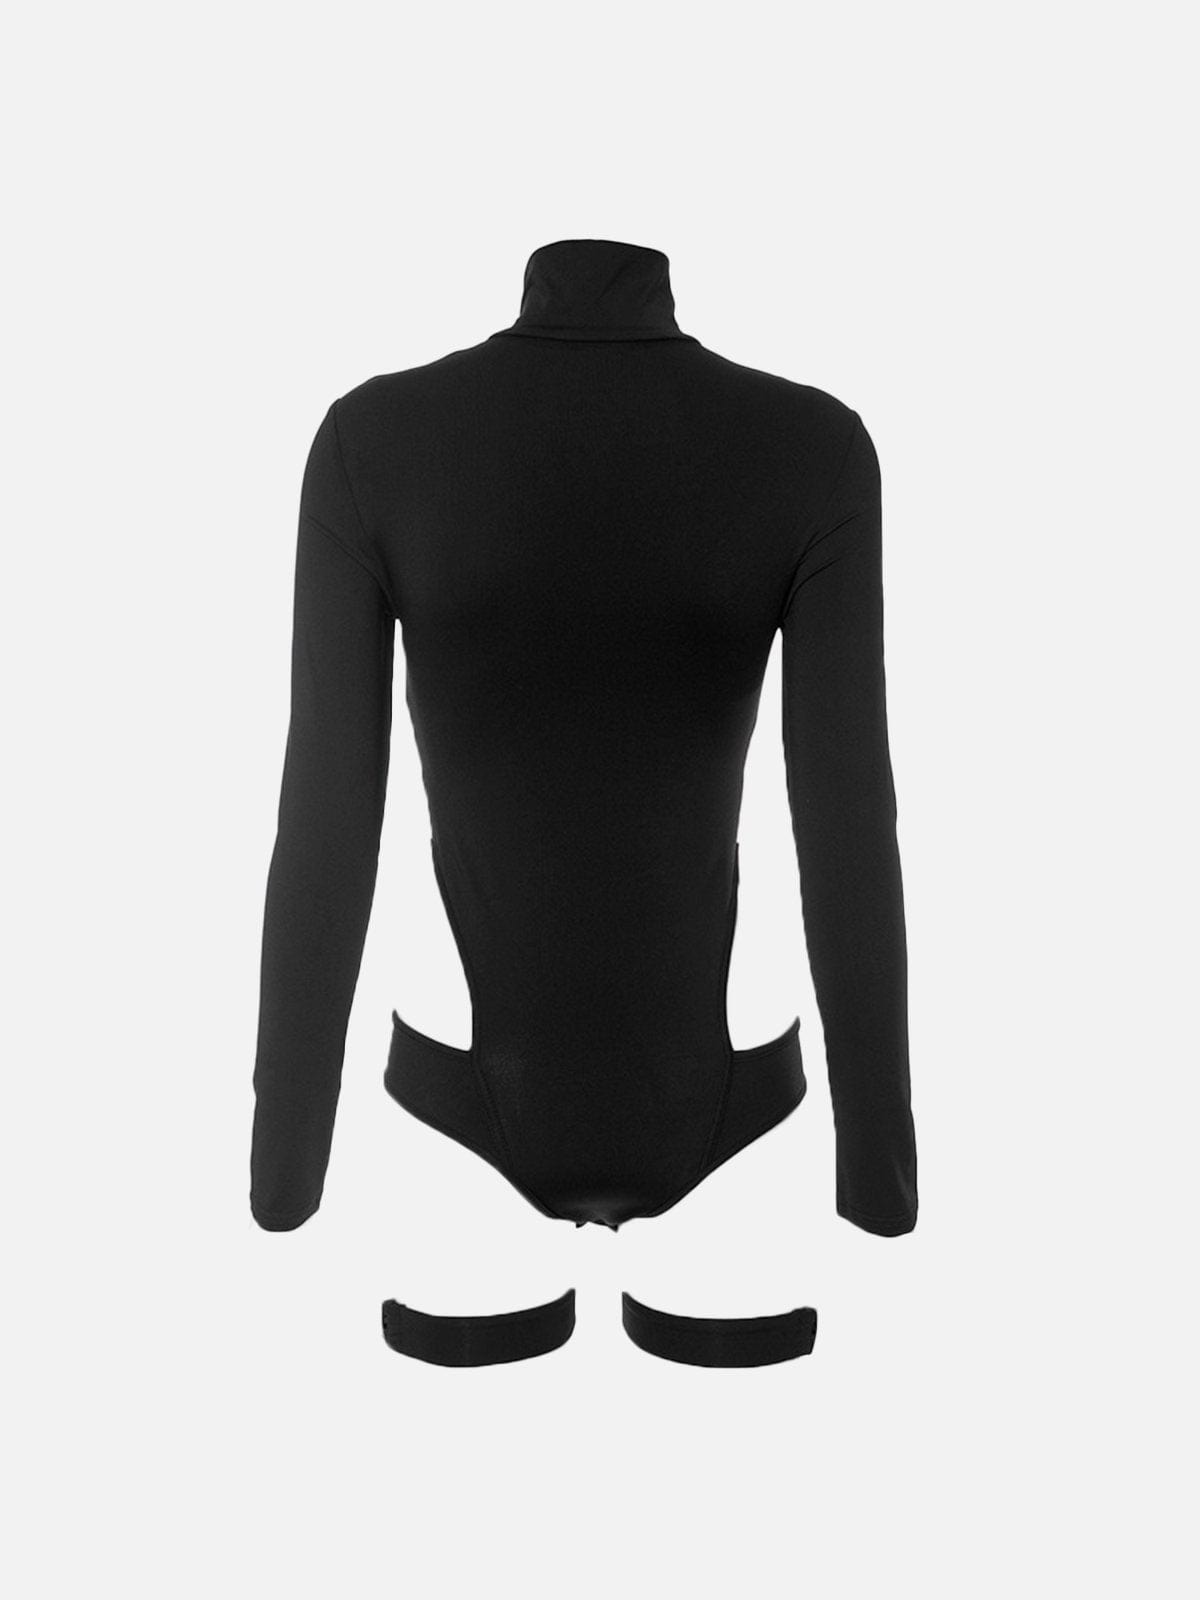 NEV Cutout Turtleneck Zipper Button Bodysuit